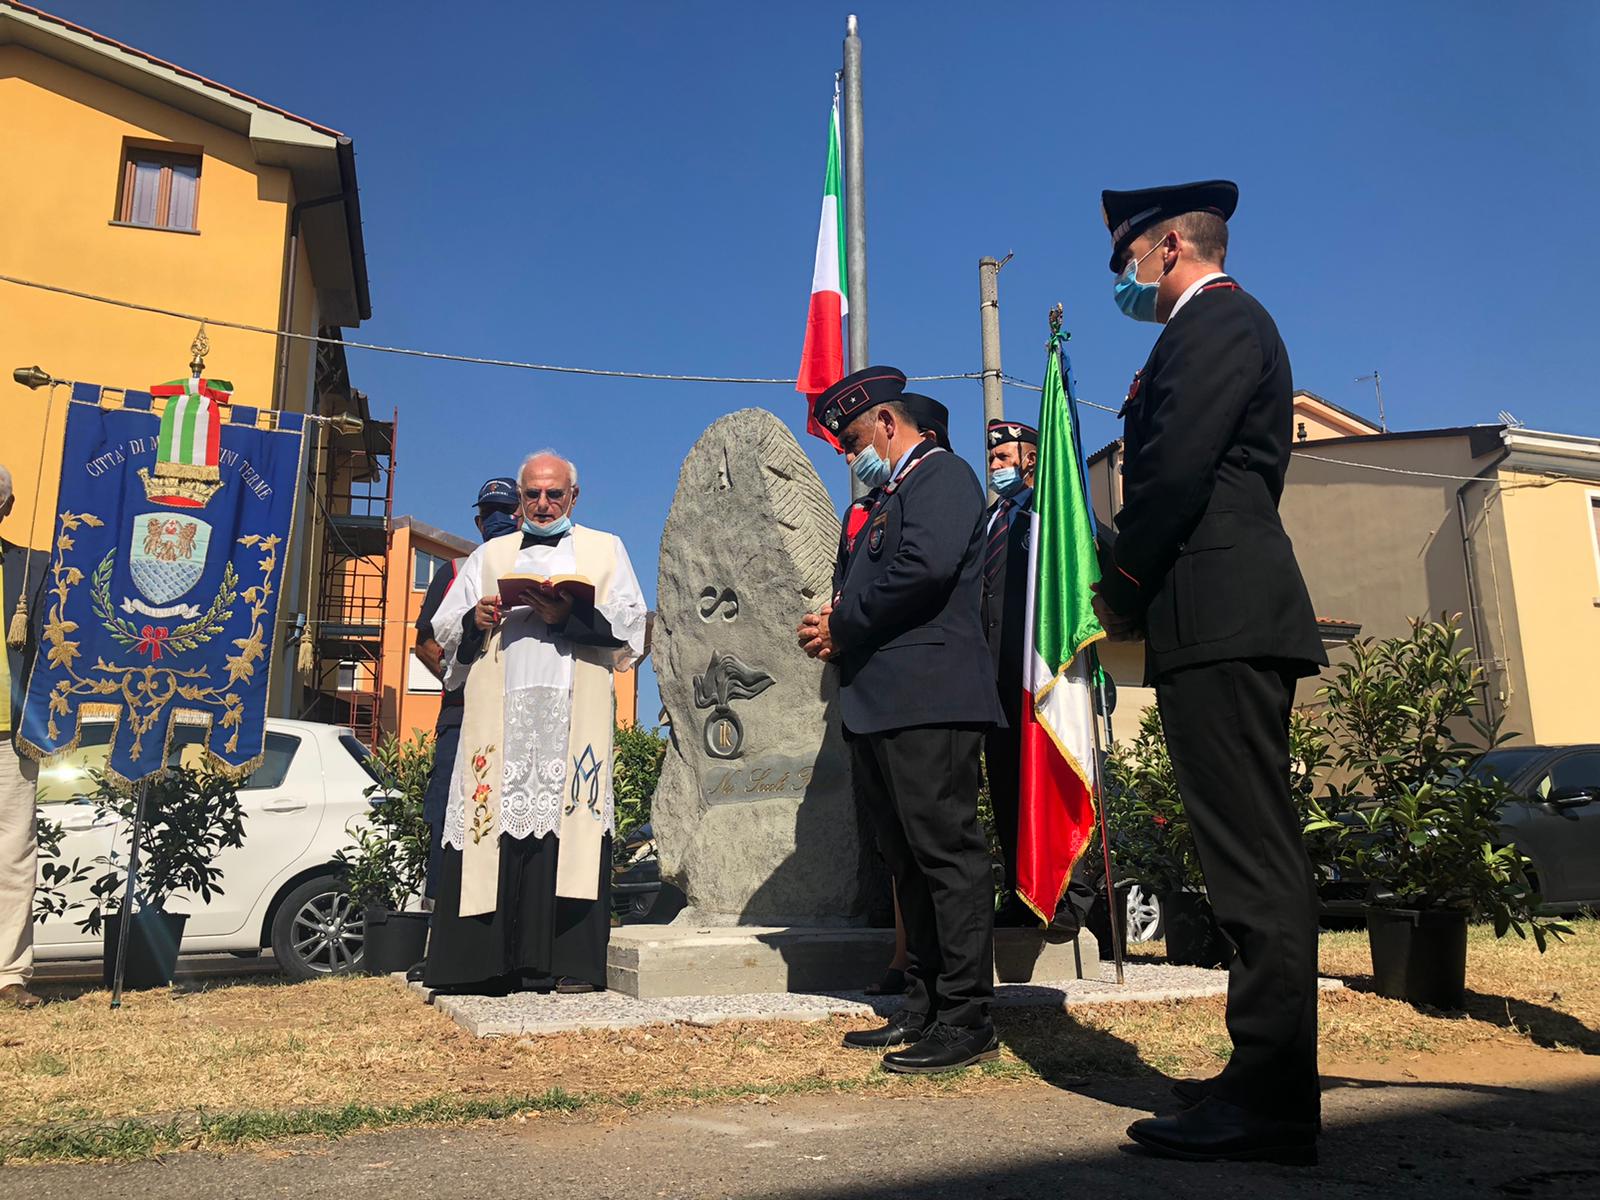 A Montecatini Terme un monumento per i Carabinieri